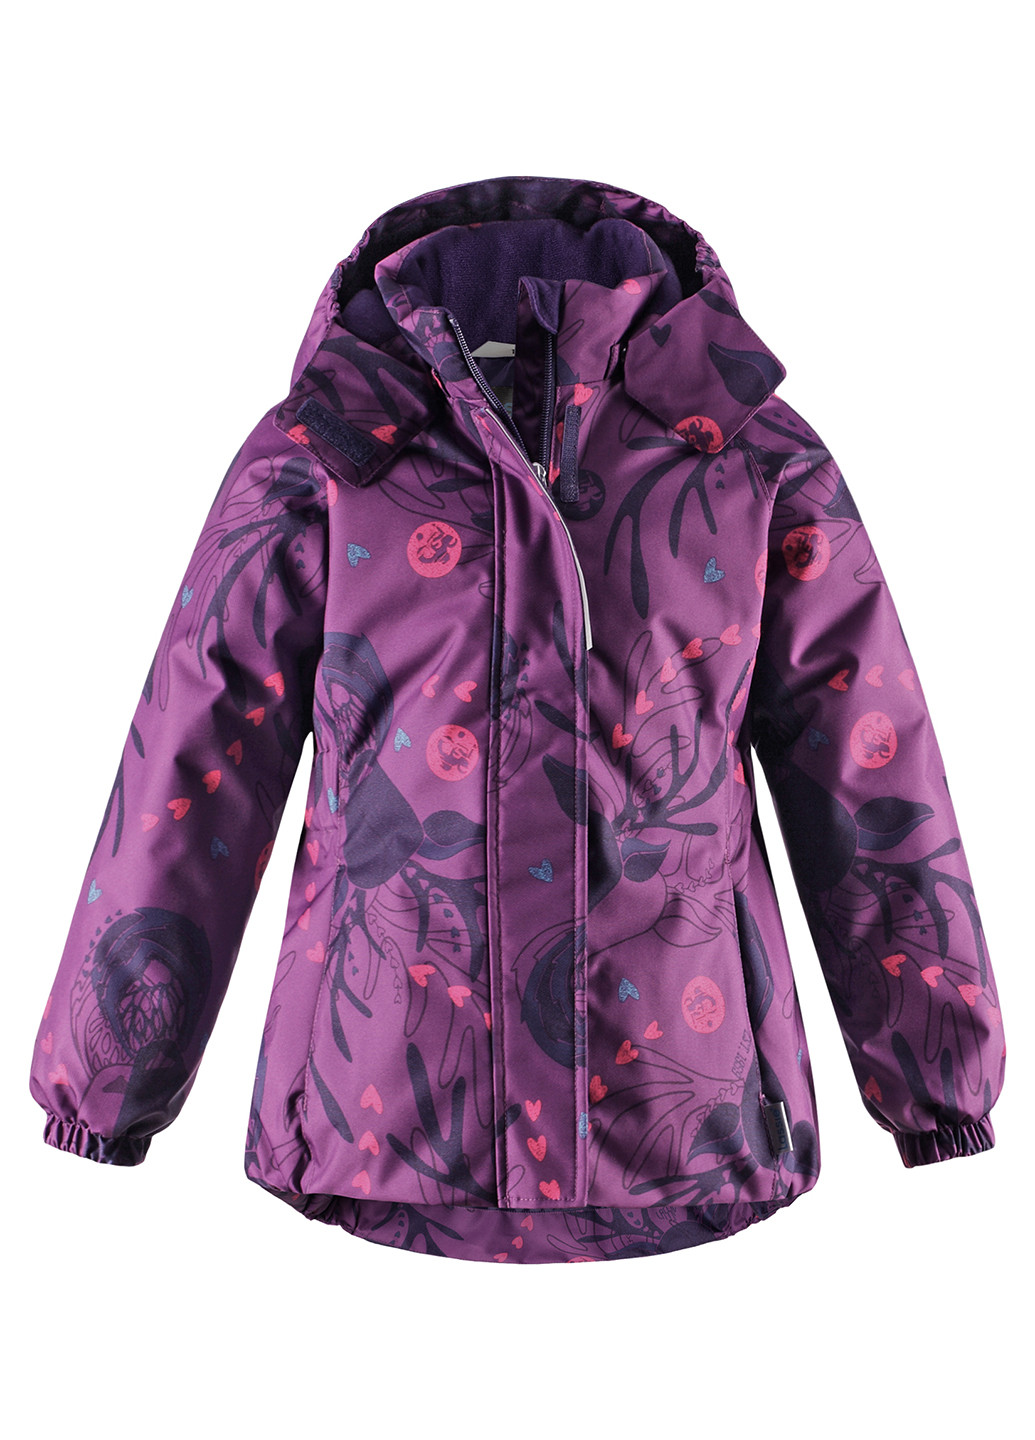 Фиолетовая зимняя куртка Lassie by Reima